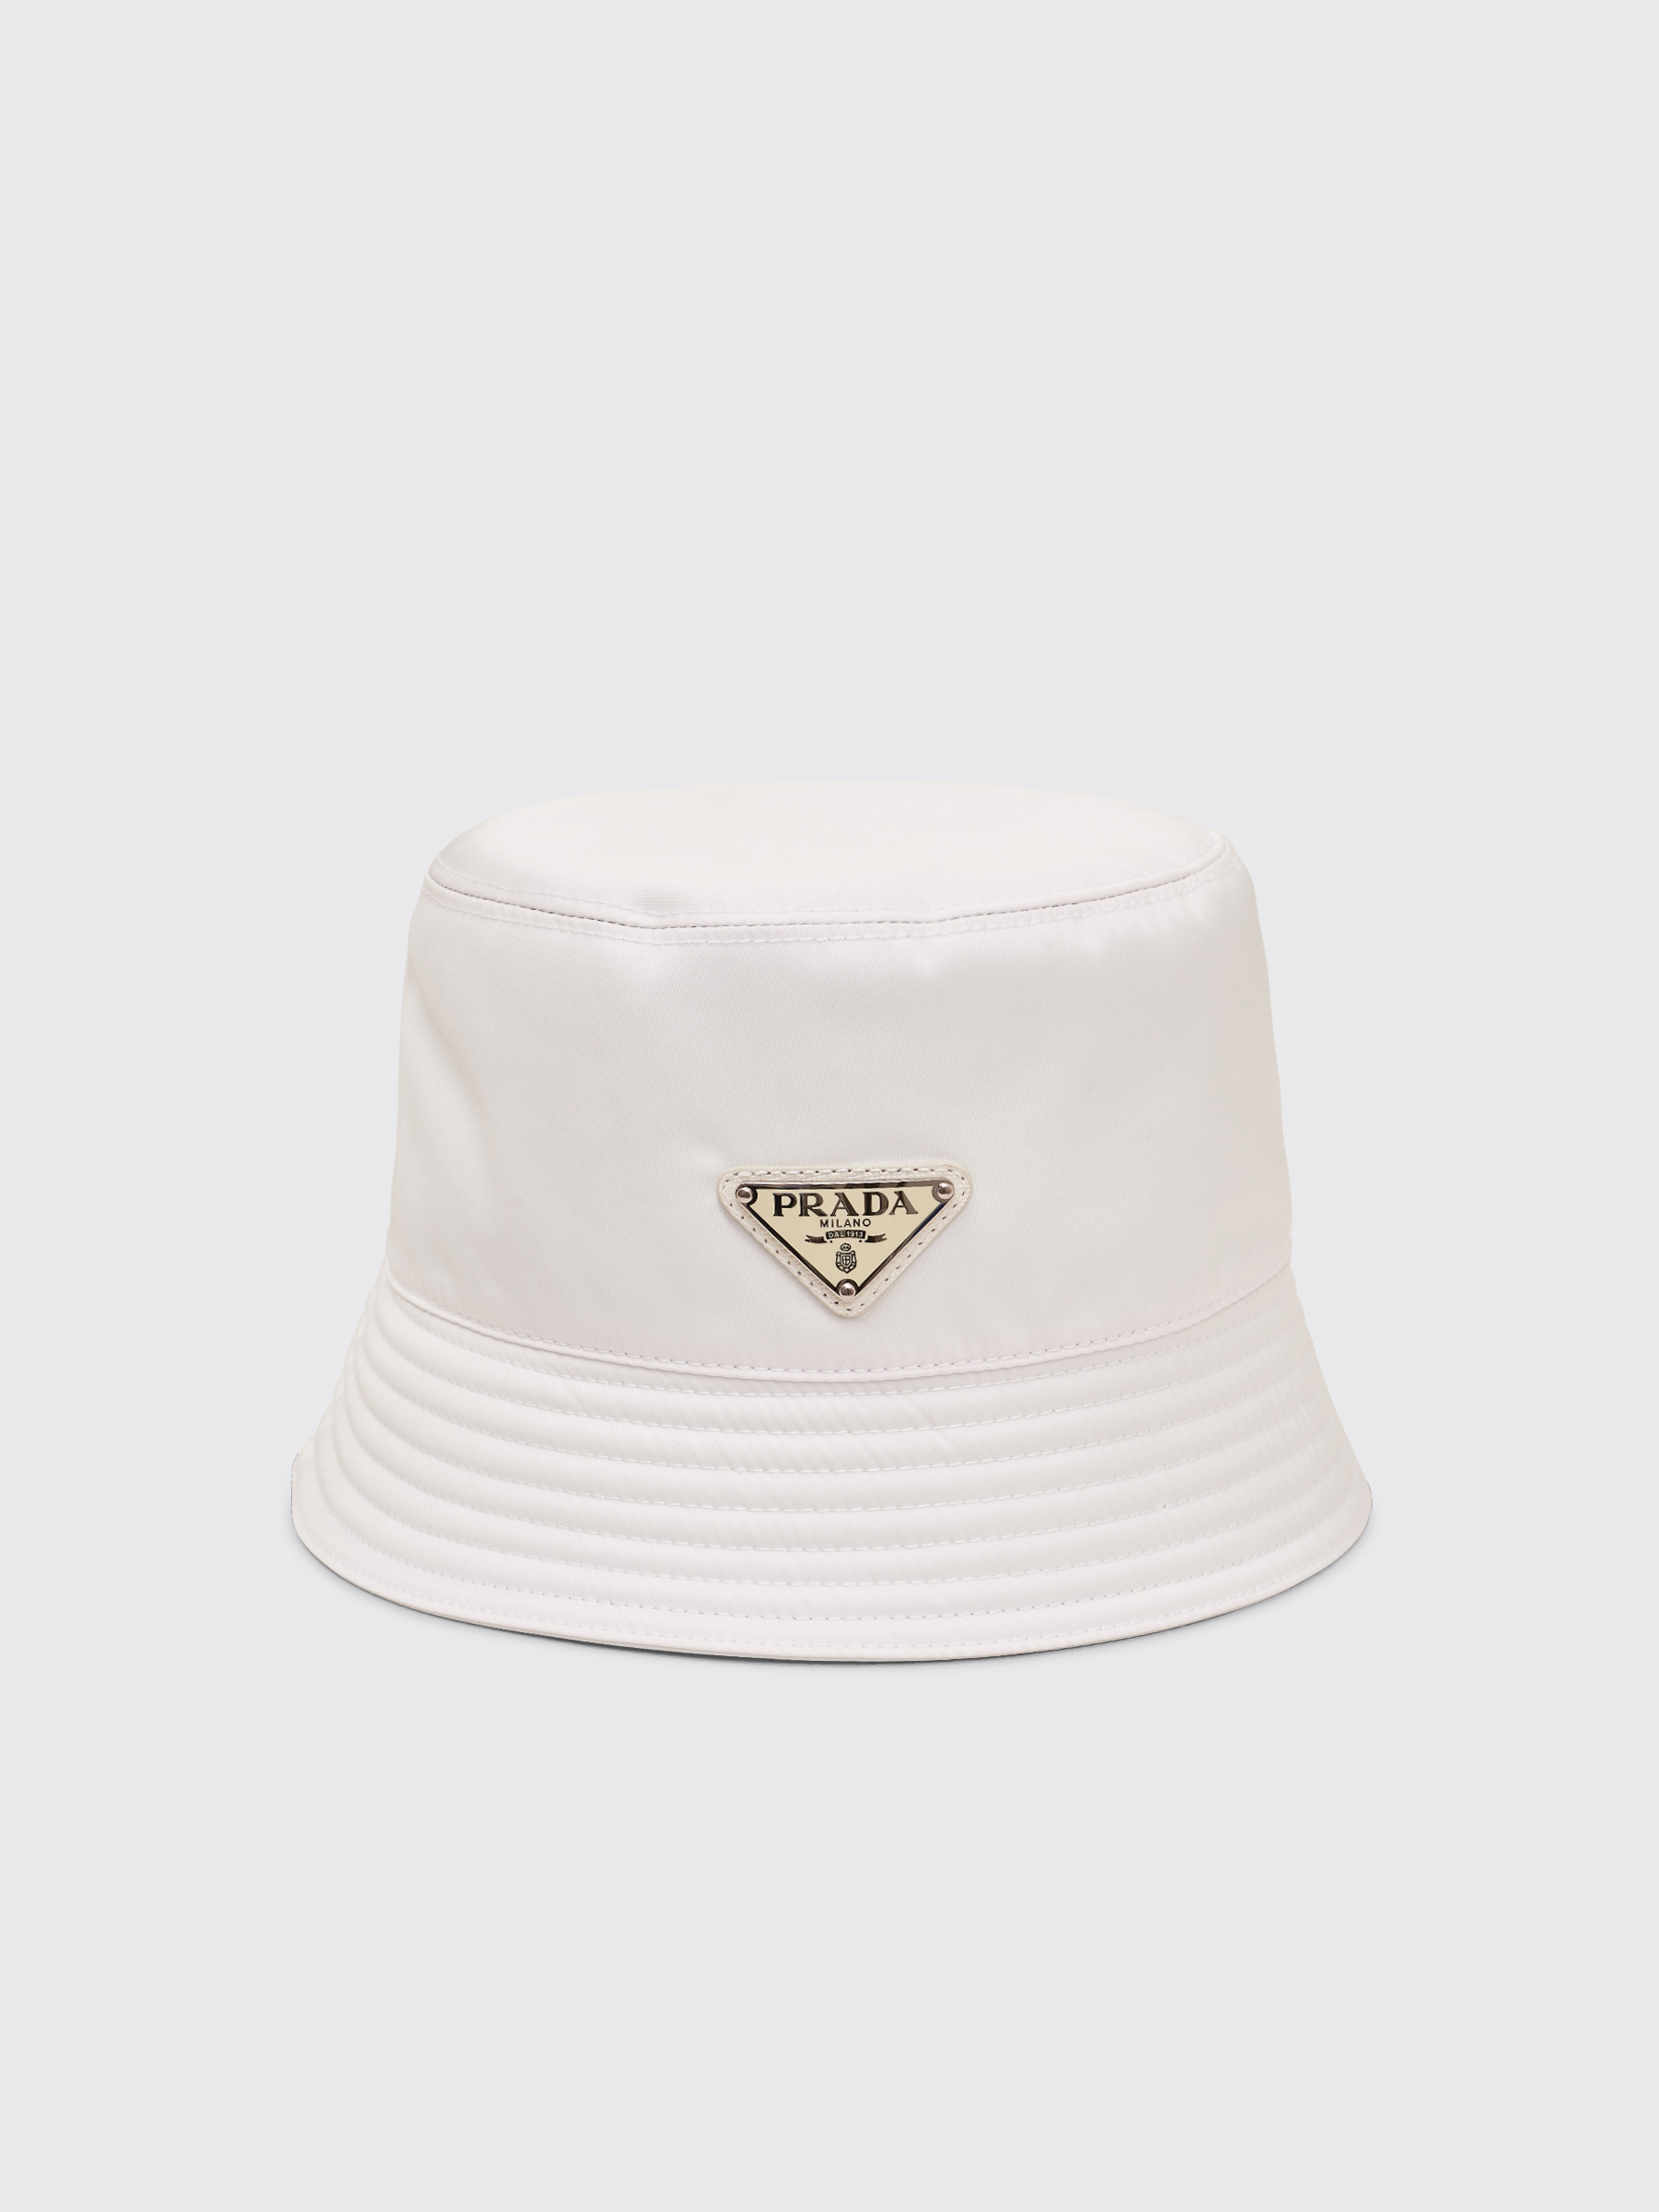 prada white bucket hat